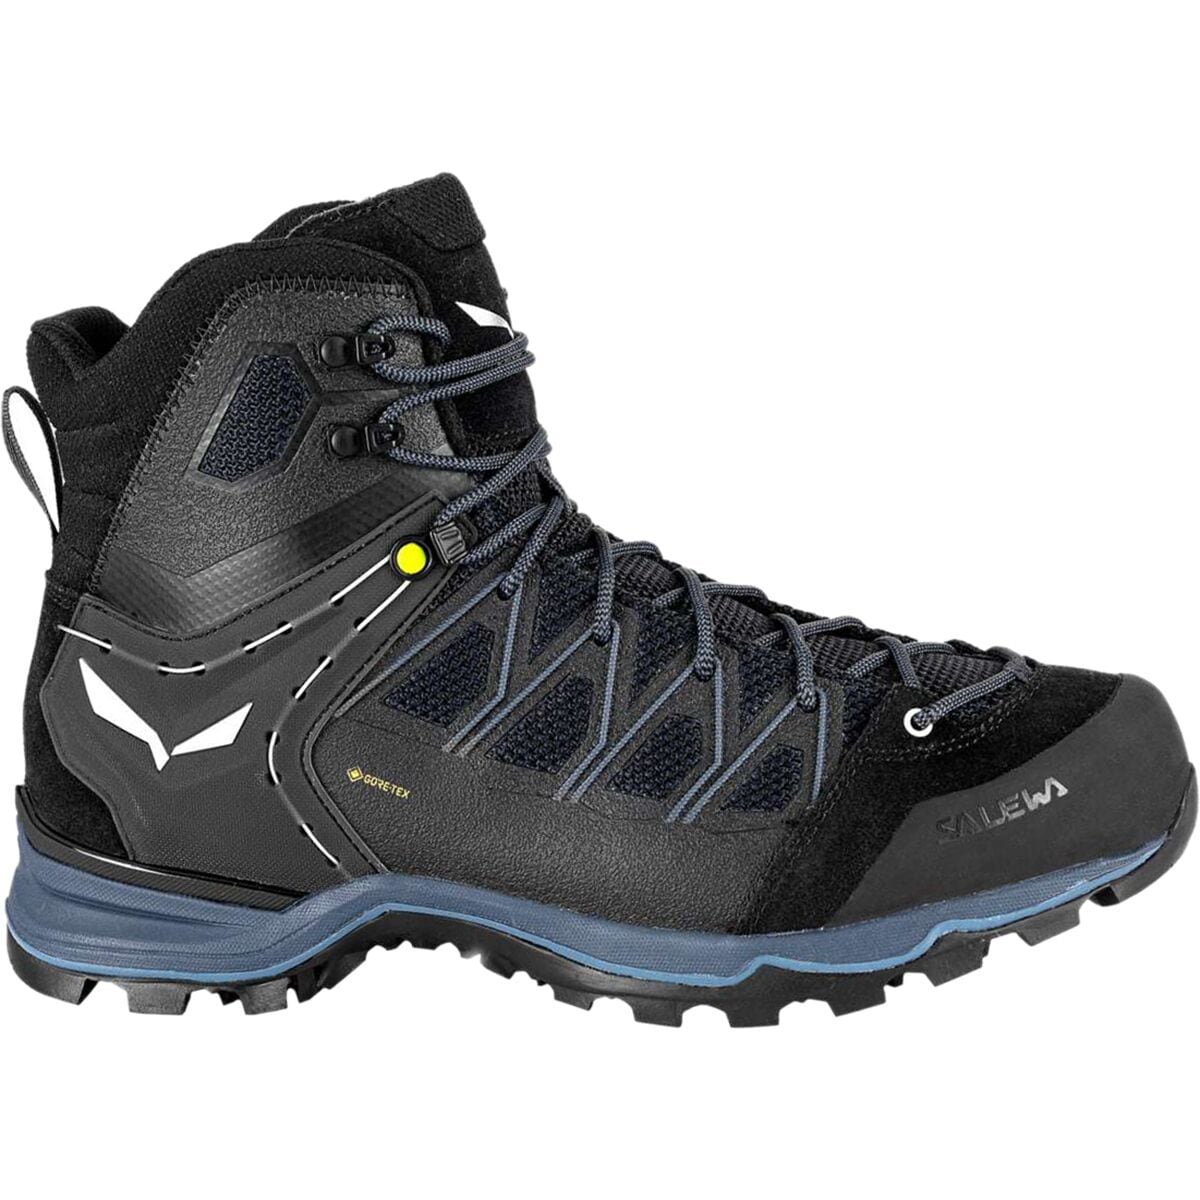 Salewa Mountain Trainer Lite Mid GTX Hiking Boot - Men's